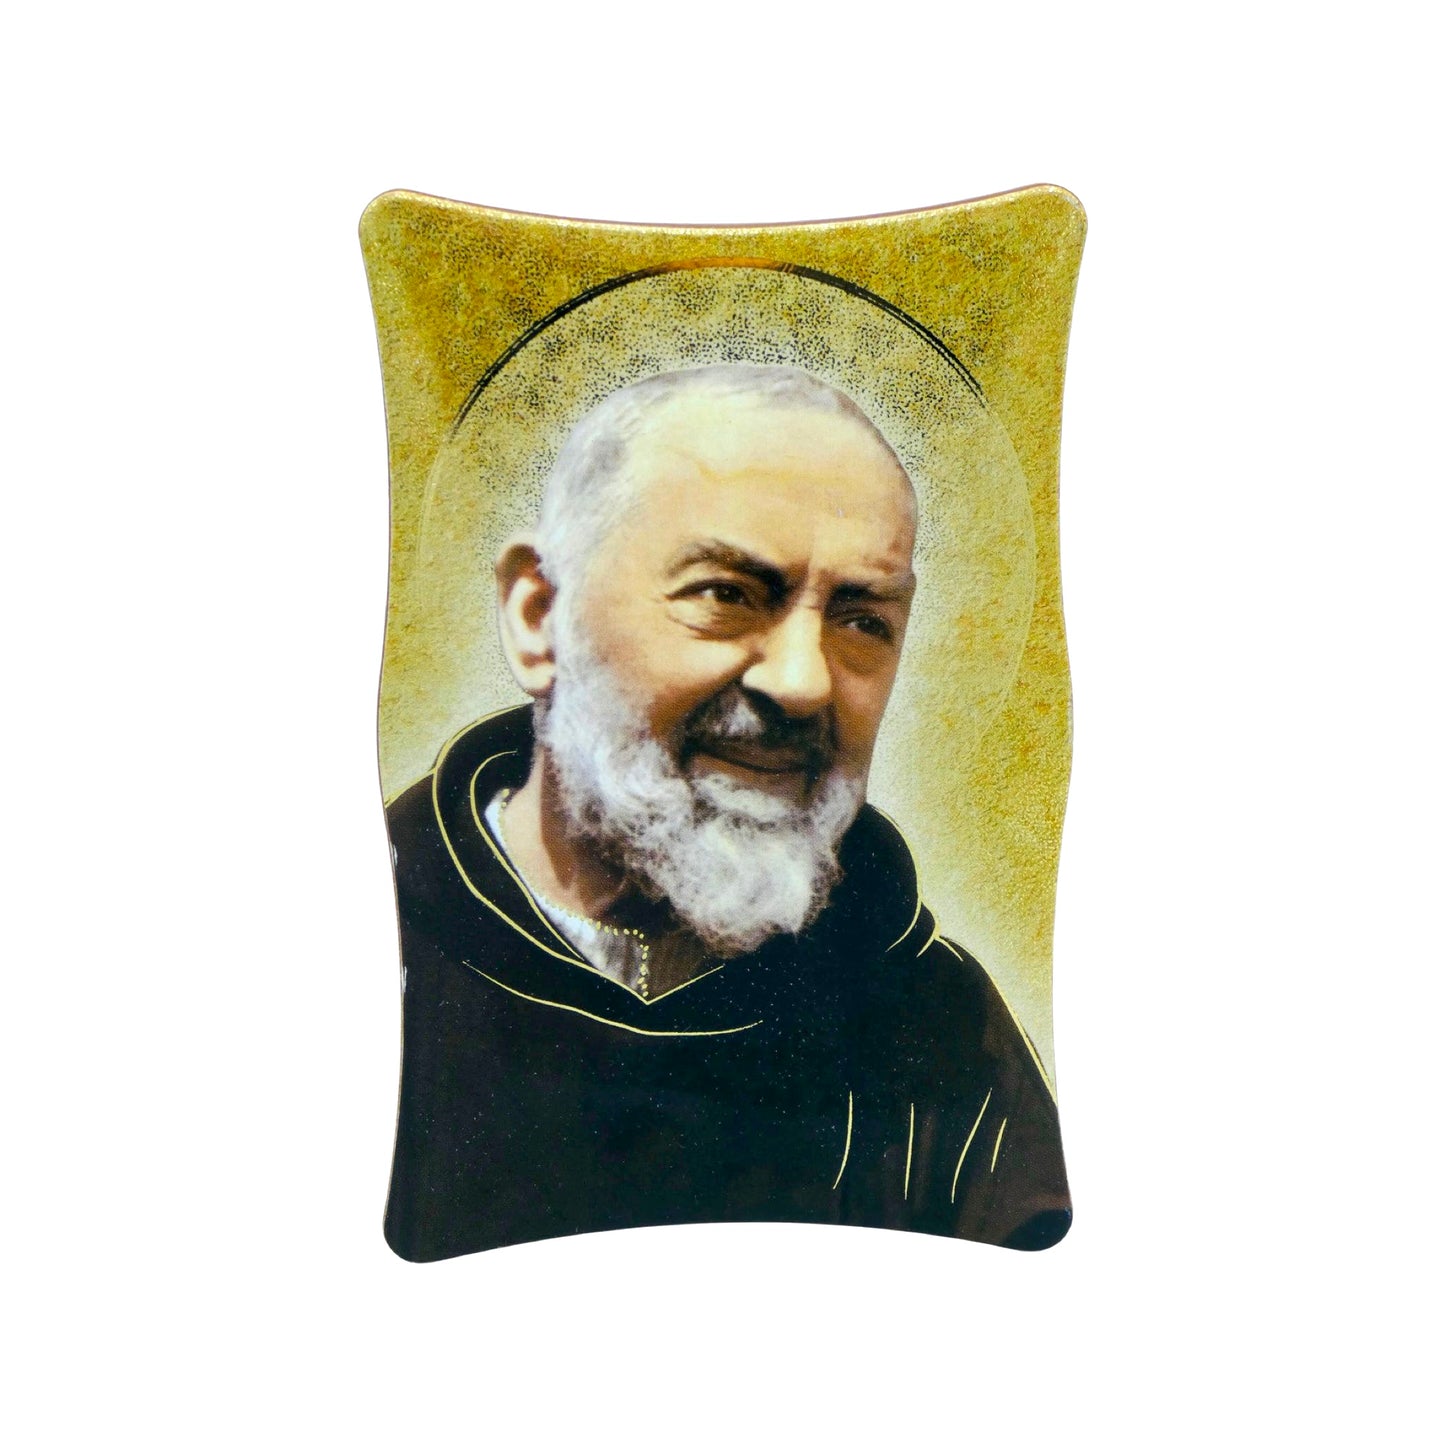 Curved Padre Pio Image